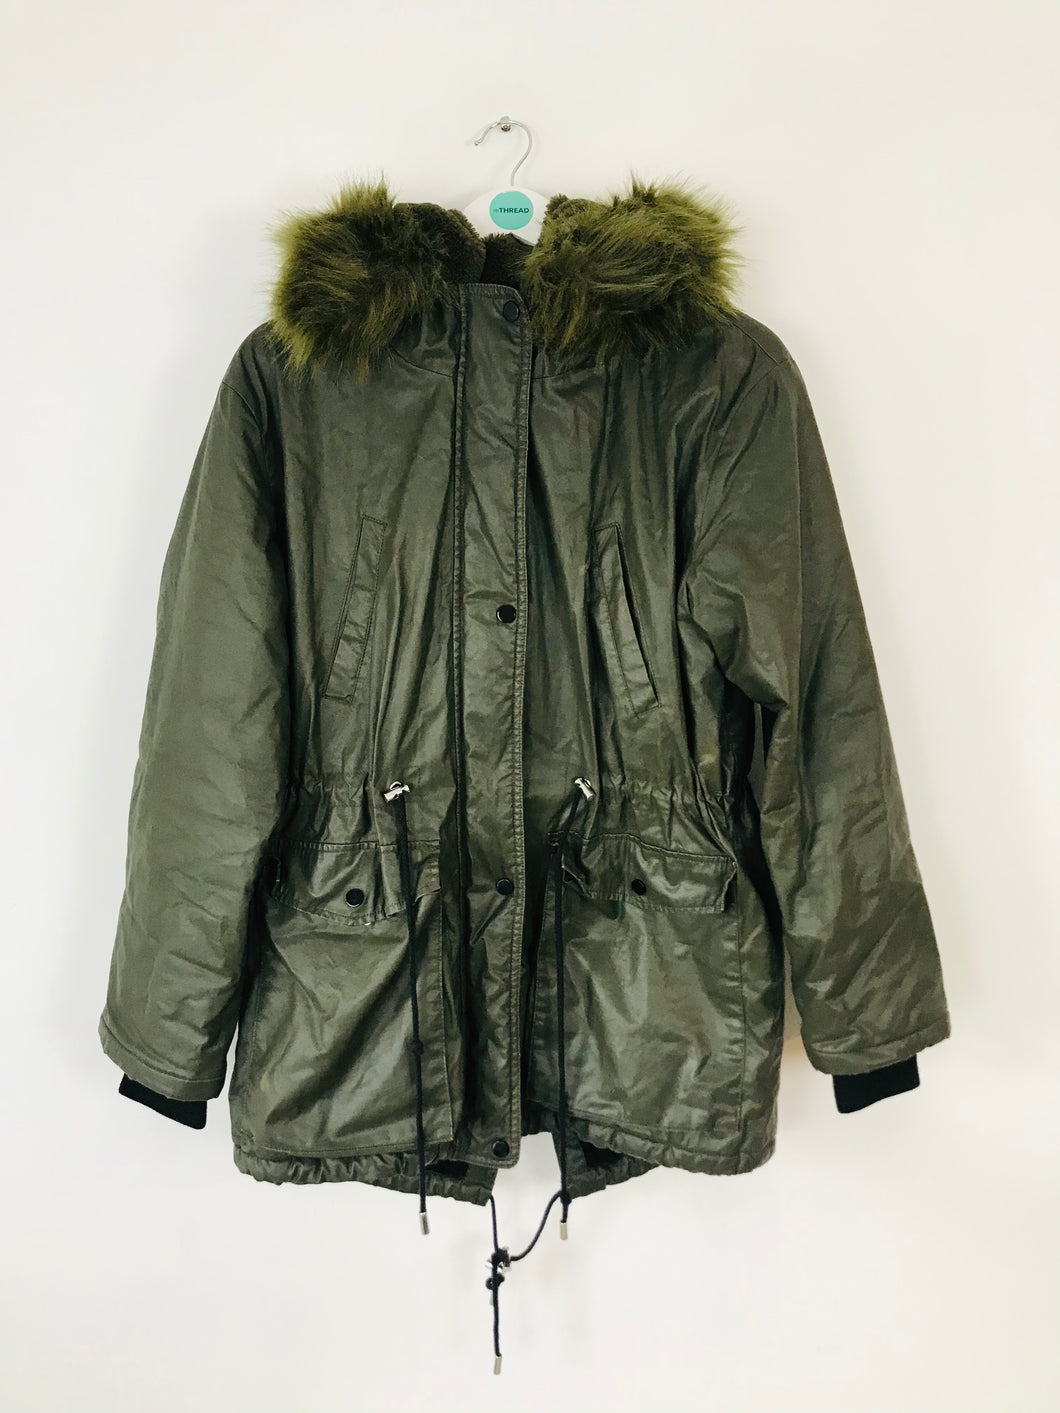 Whistles Women’s Waxy Faux Fur Hooded Parka Coat | M UK10-12 | Khaki Green